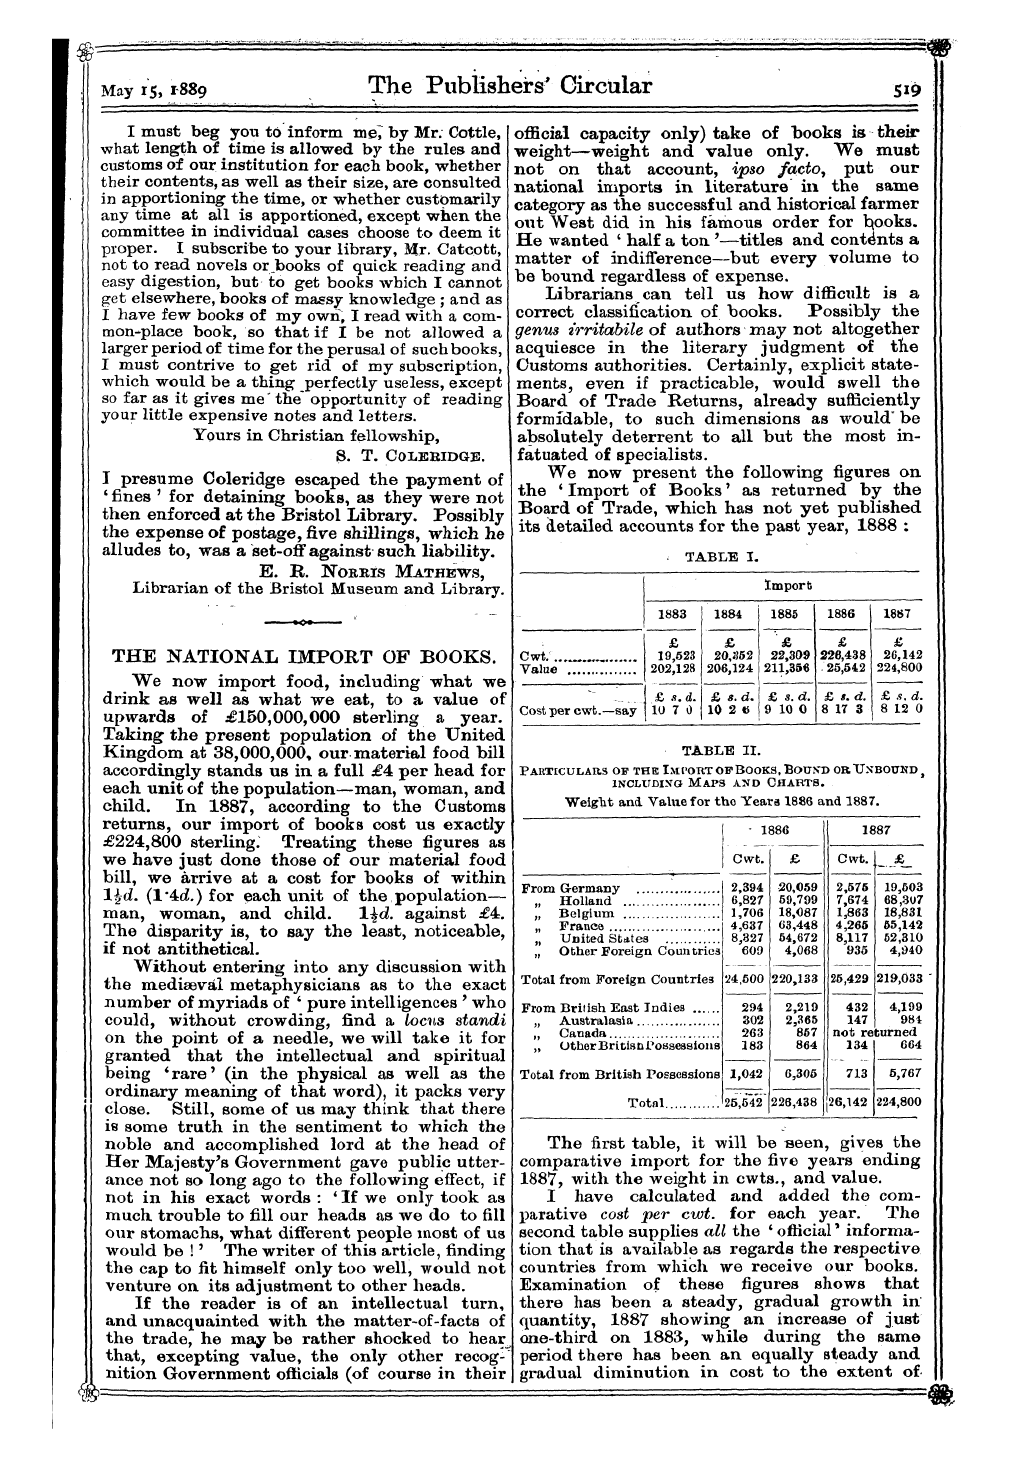 Publishers’ Circular (1880-1890): jS F Y, 1st edition: 9